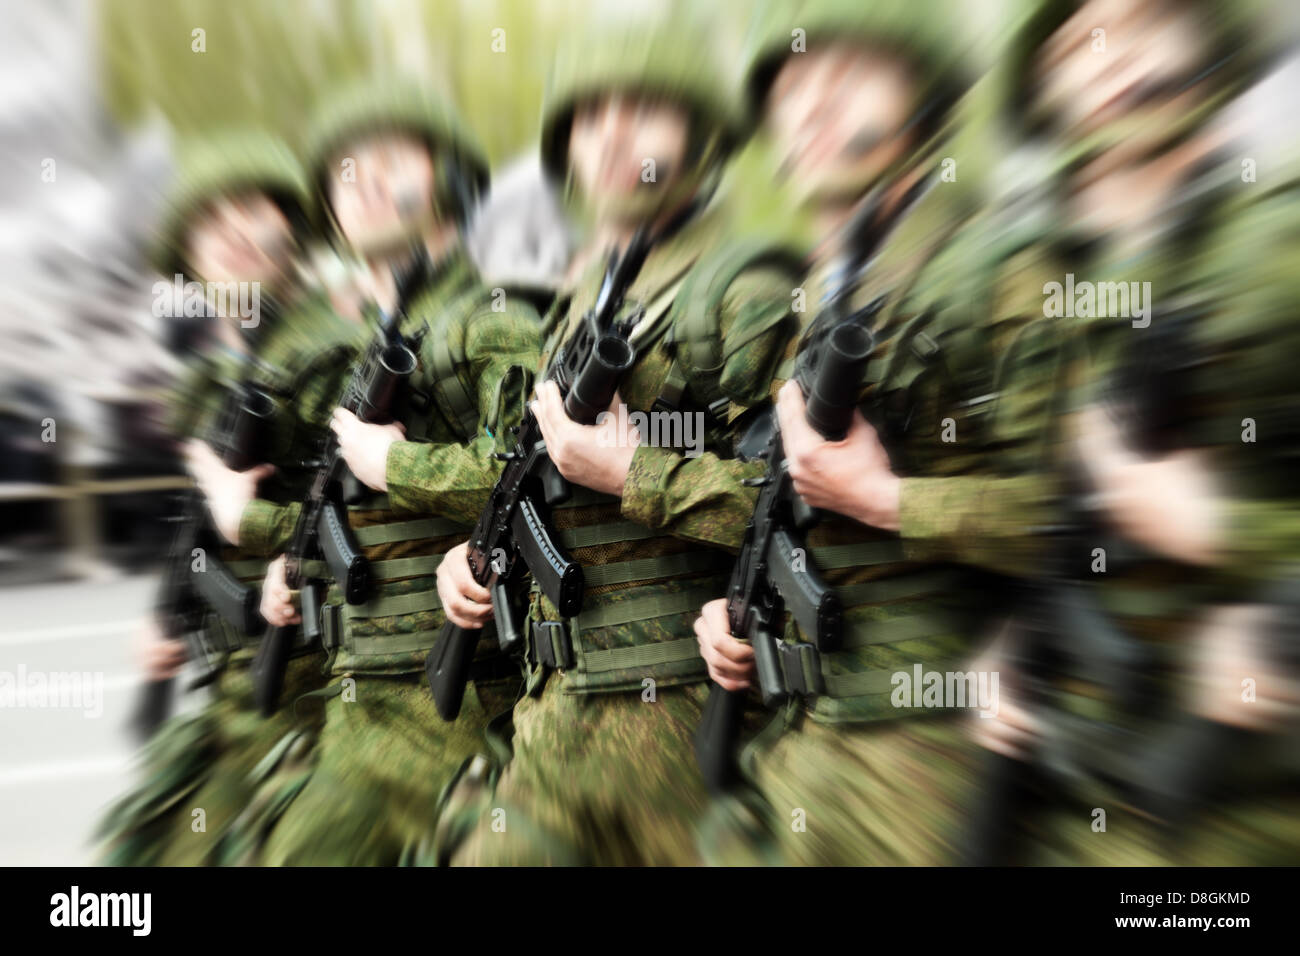 Military uniform soldier row Stock Photo